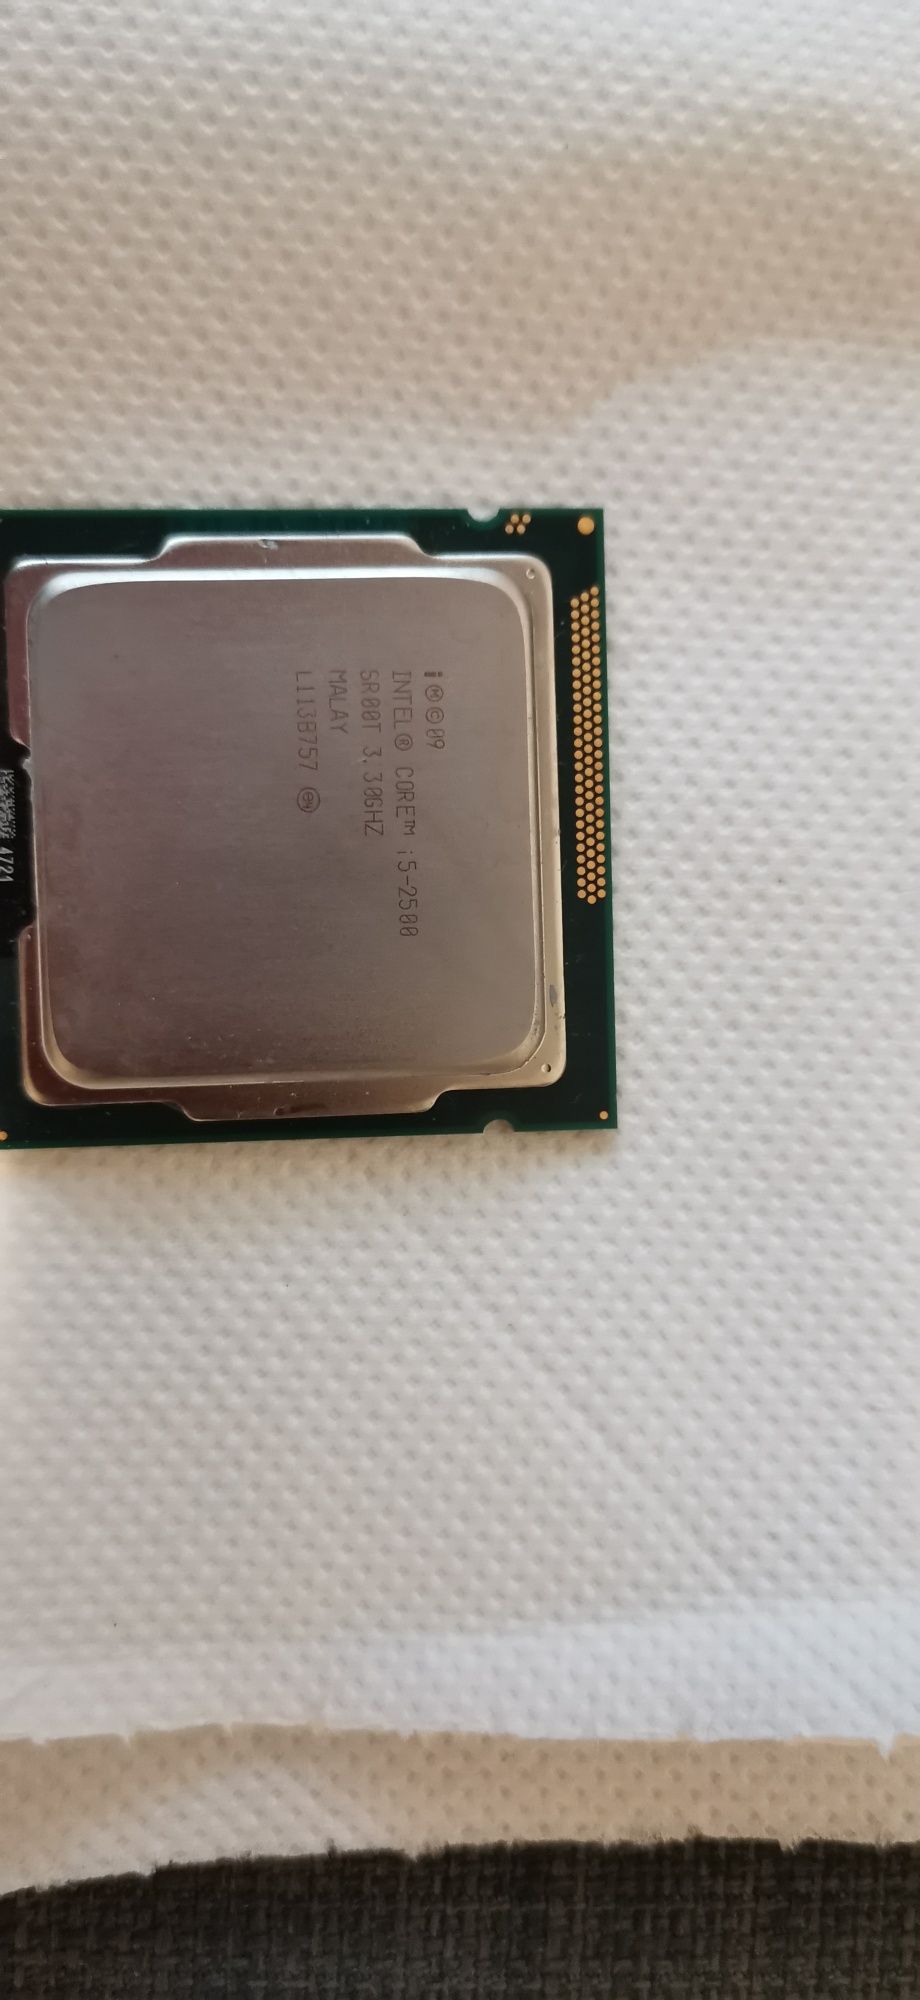 Procesor Intel I5 2500